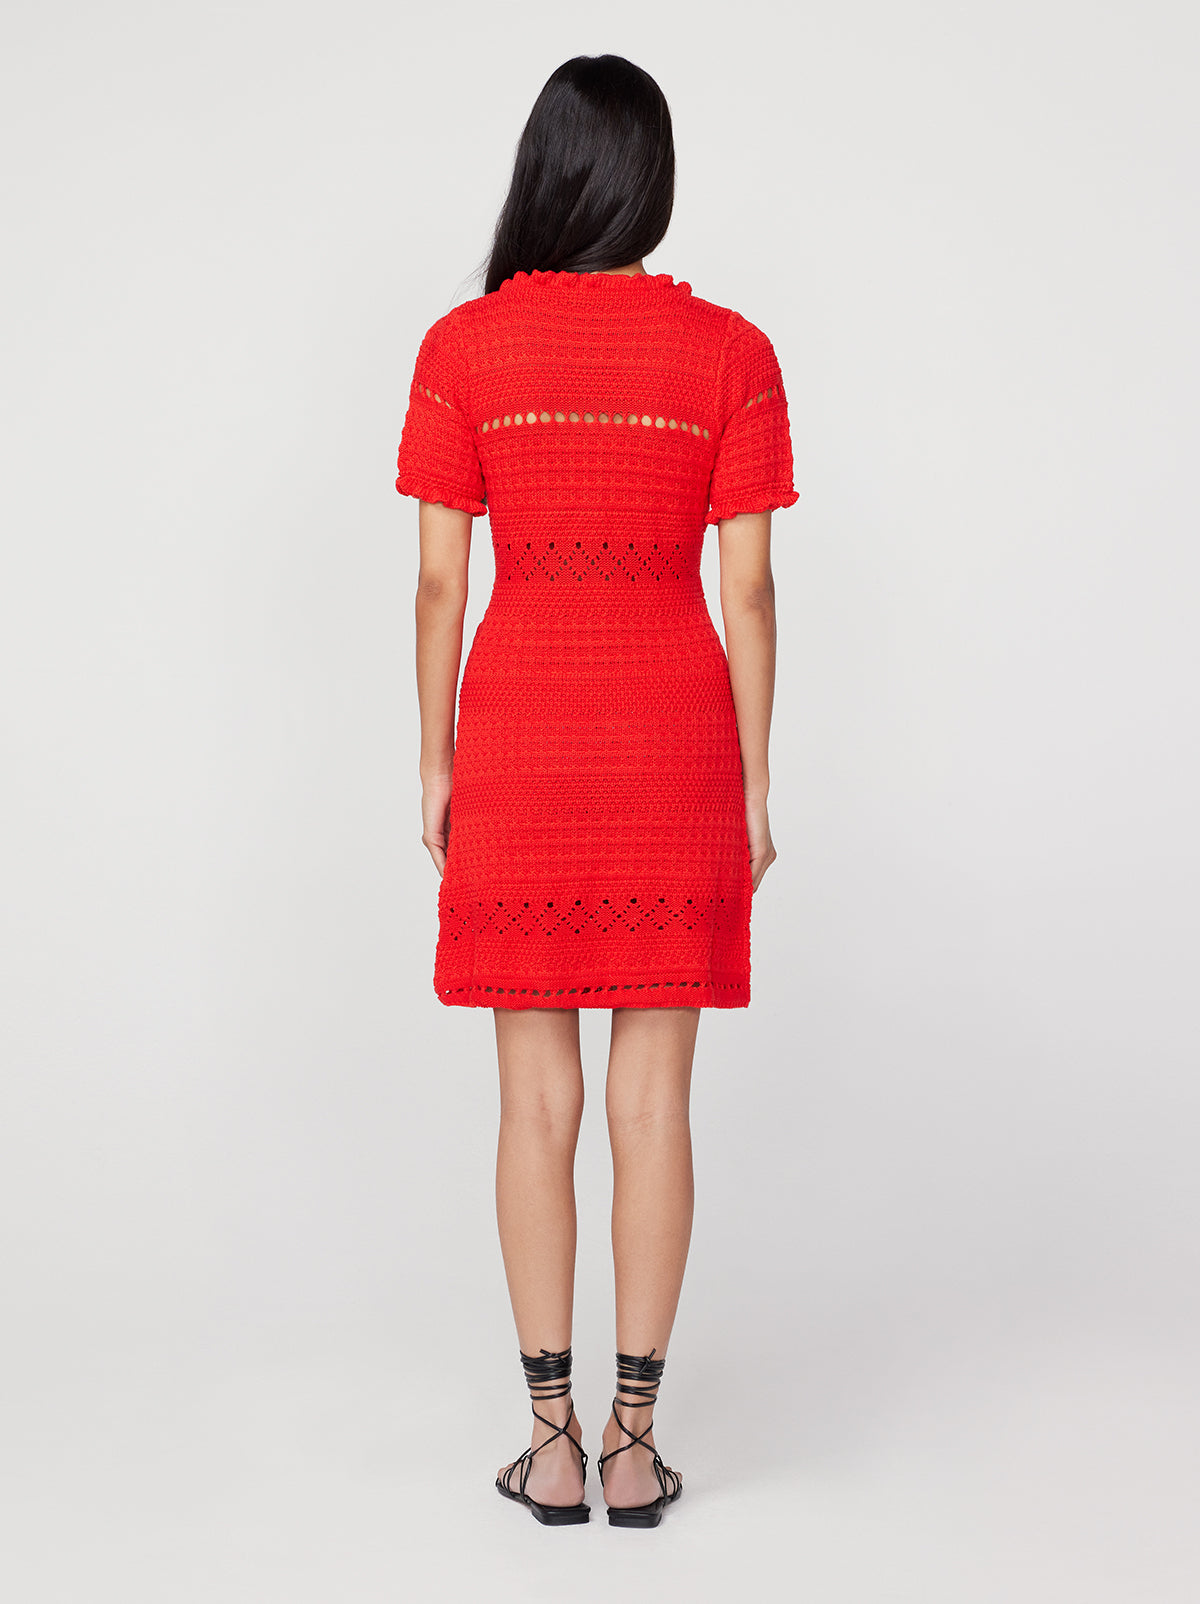 Leonie Red Crochet Knit Mini Dress By KITRI Studio